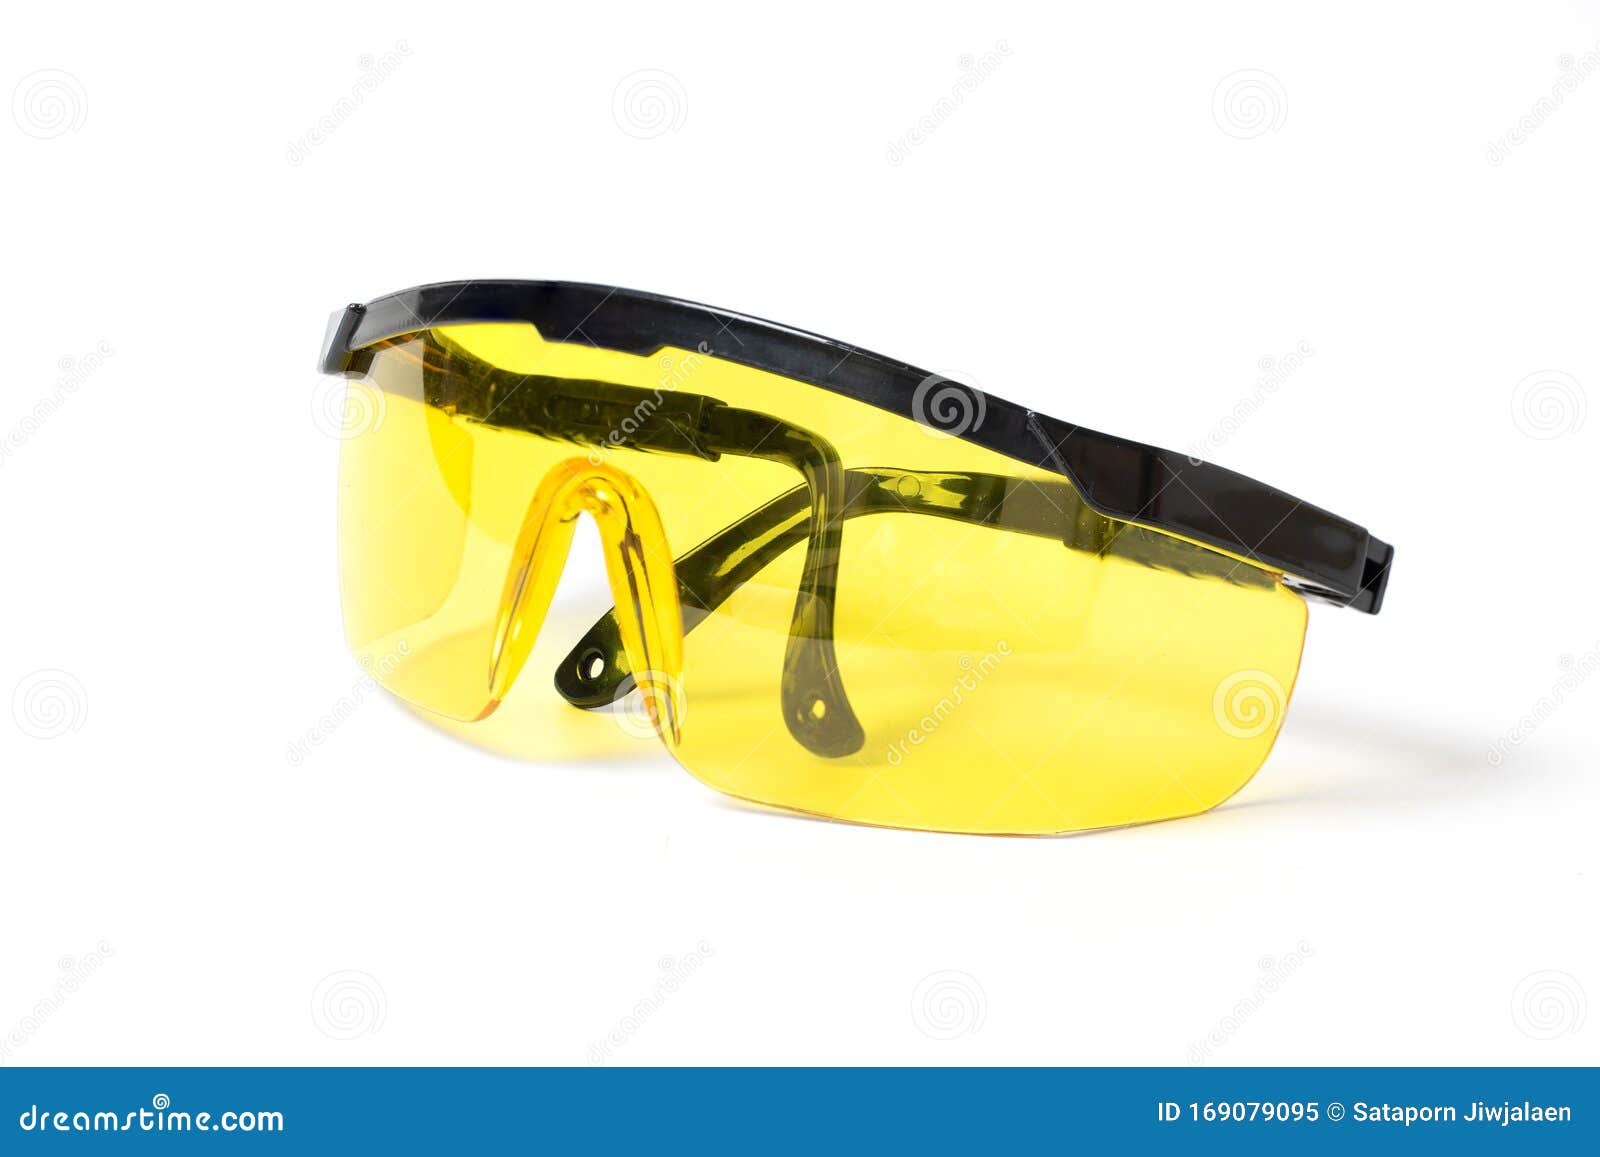 Easyinsmile Fashion Brand New Anti-fog UV Protection Adjustable Safety Glasses with Yellow Tint 54001 